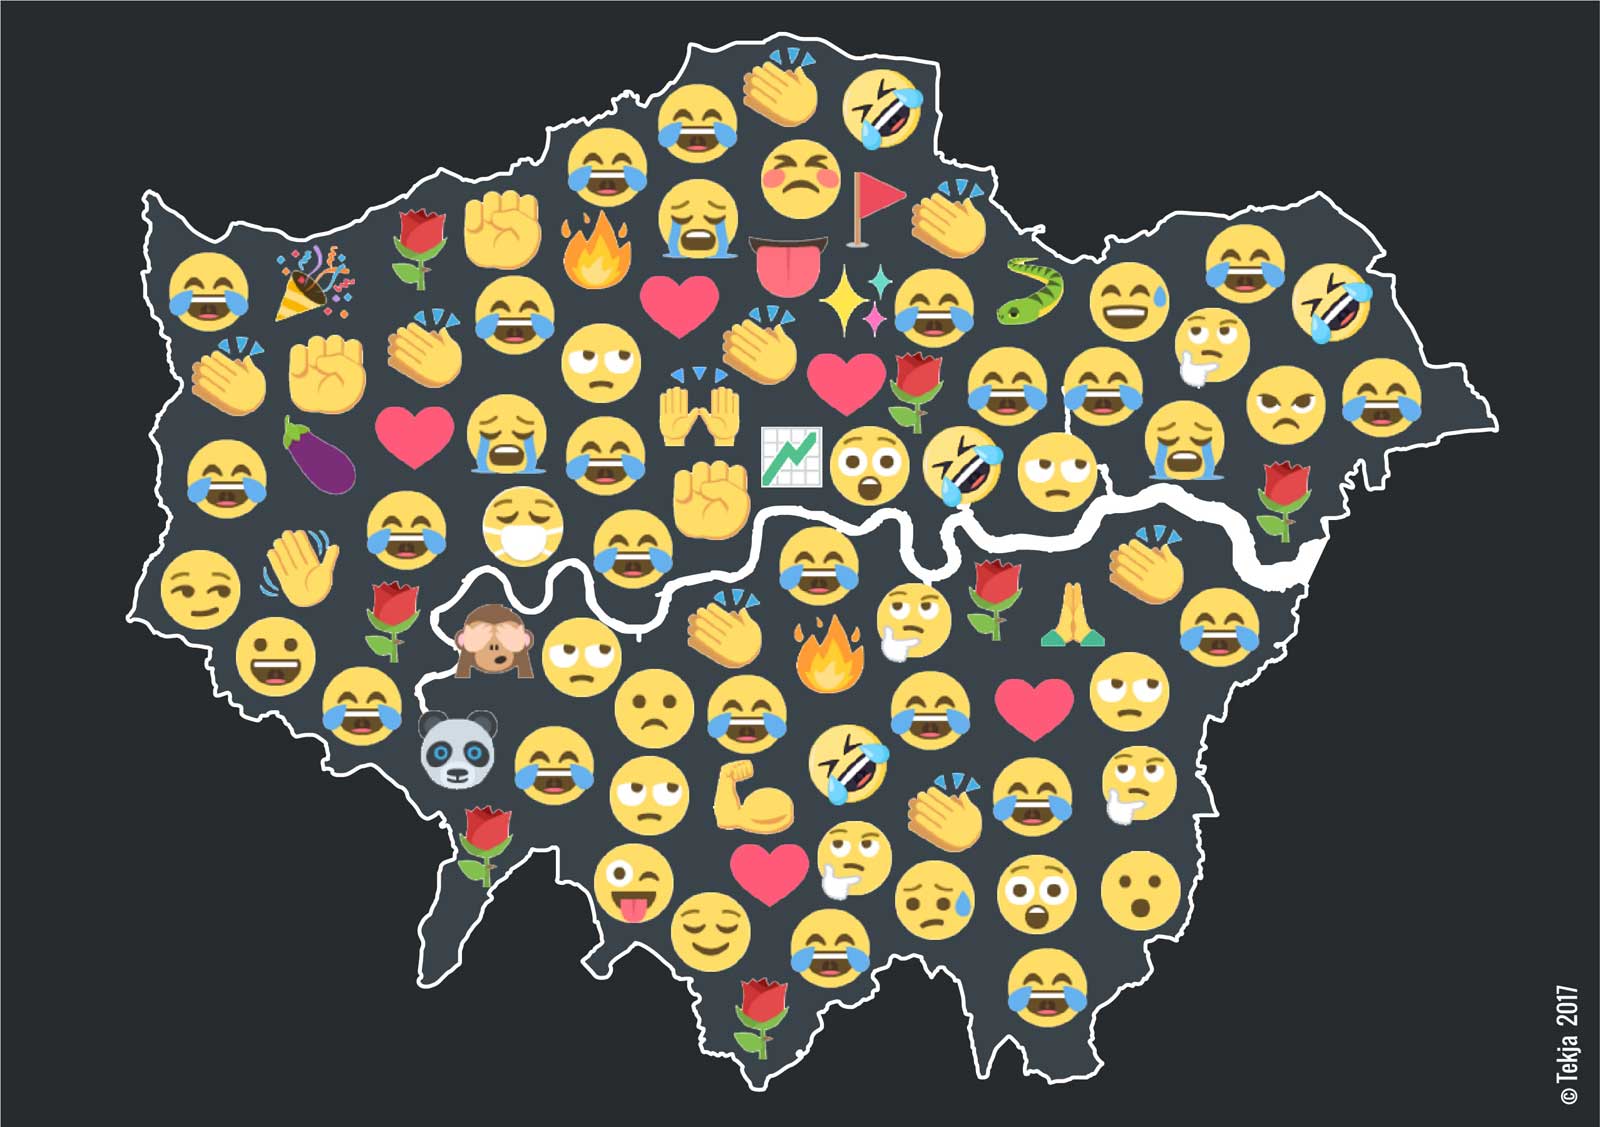 Data visualisations of London's emoji use.